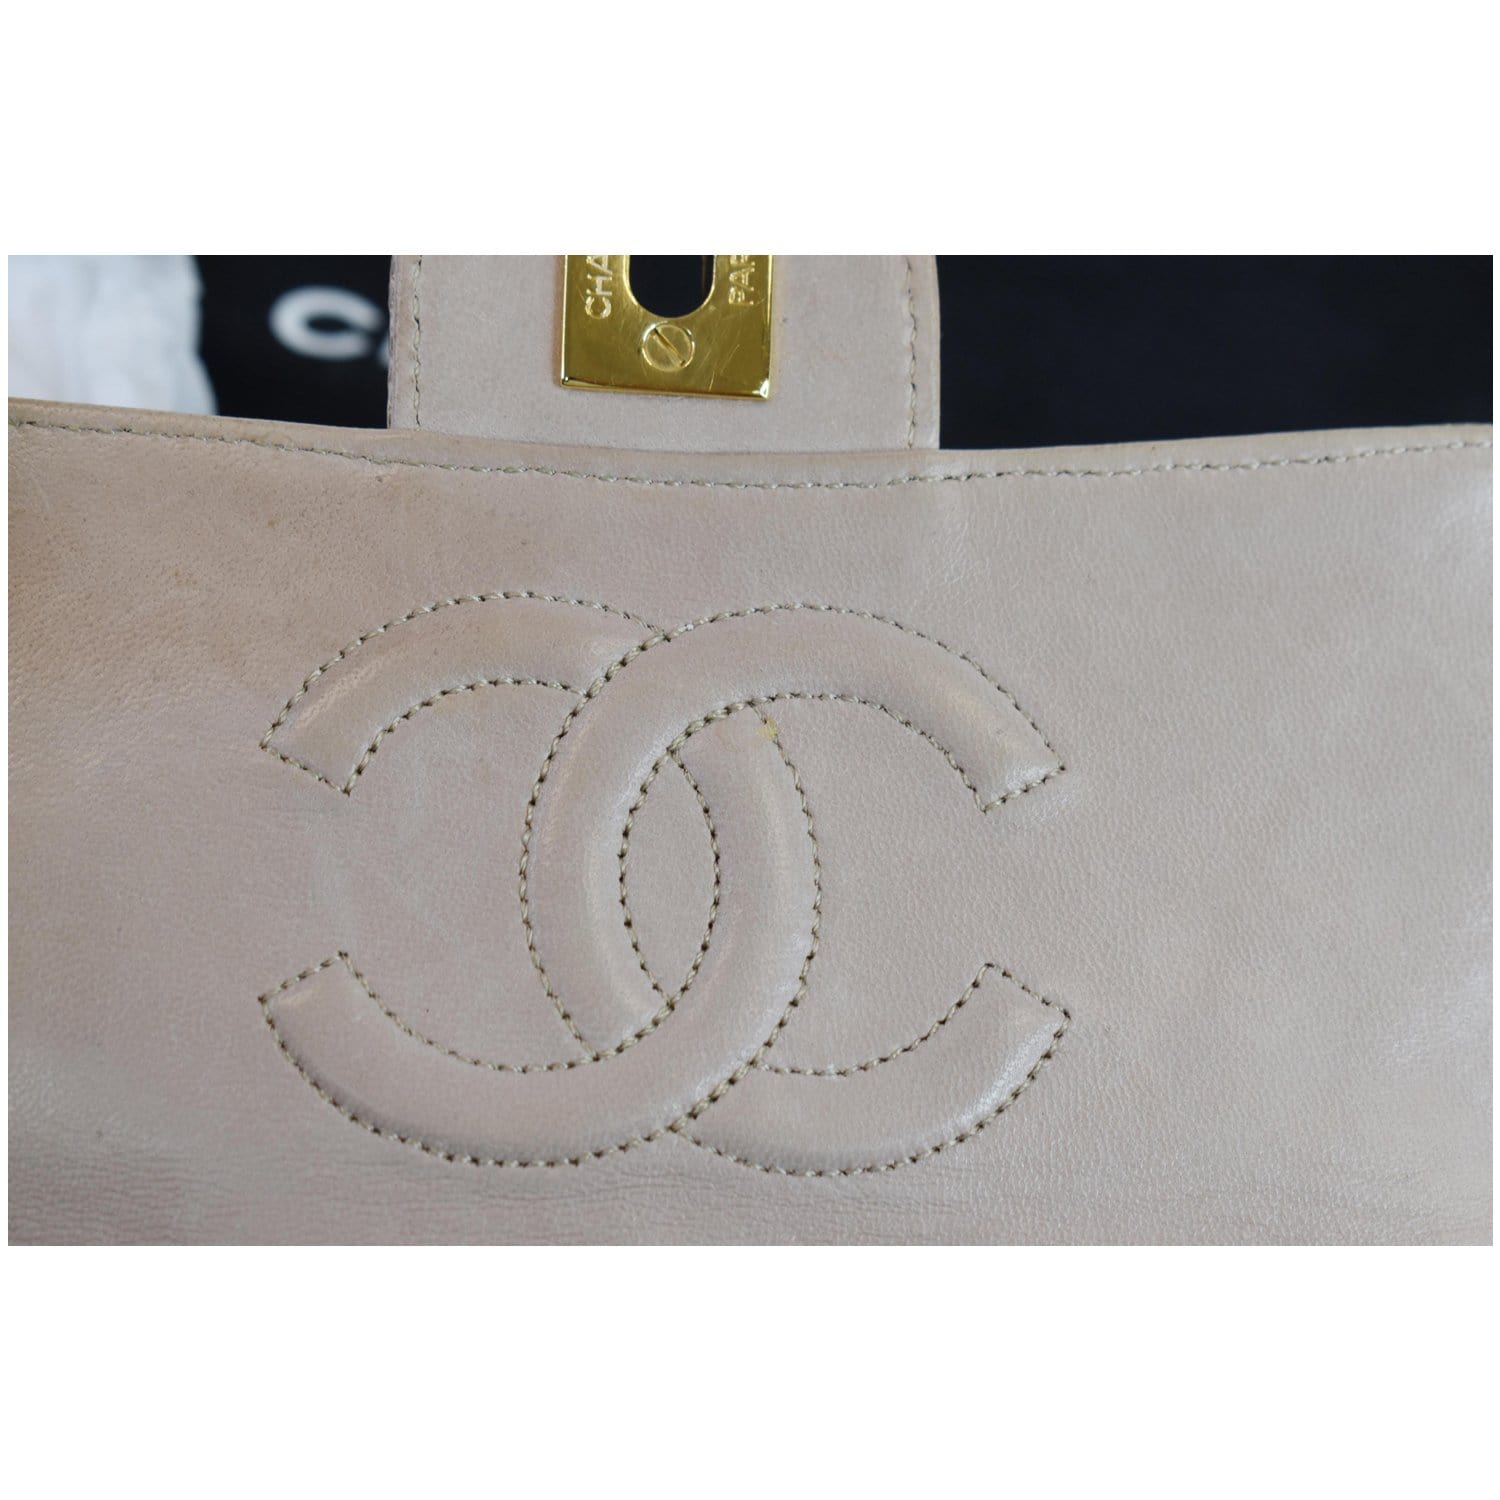 Chanel Vintage Mini Square Flap Lizard Shoulder Bag